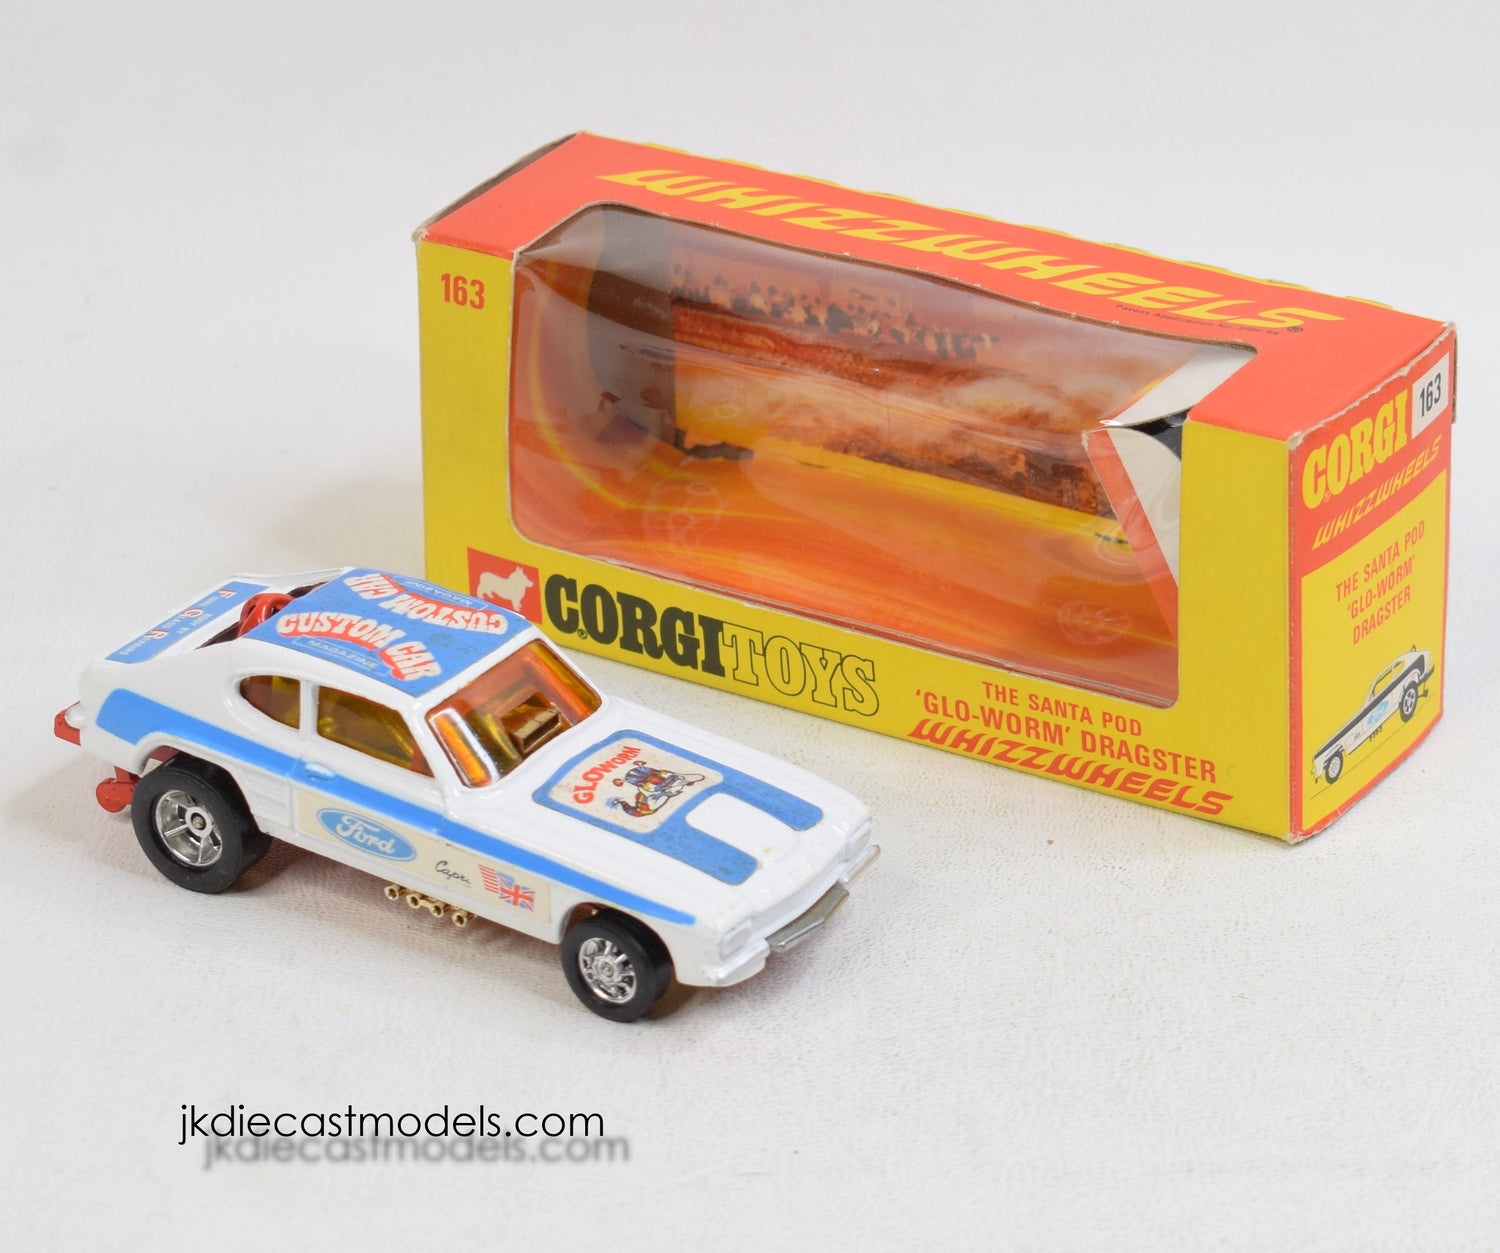 Corgi toys 163 'Glow-Worm' Dragster Virtually Mint/Boxed (Rare wheel version) 'Avonmore' Collection